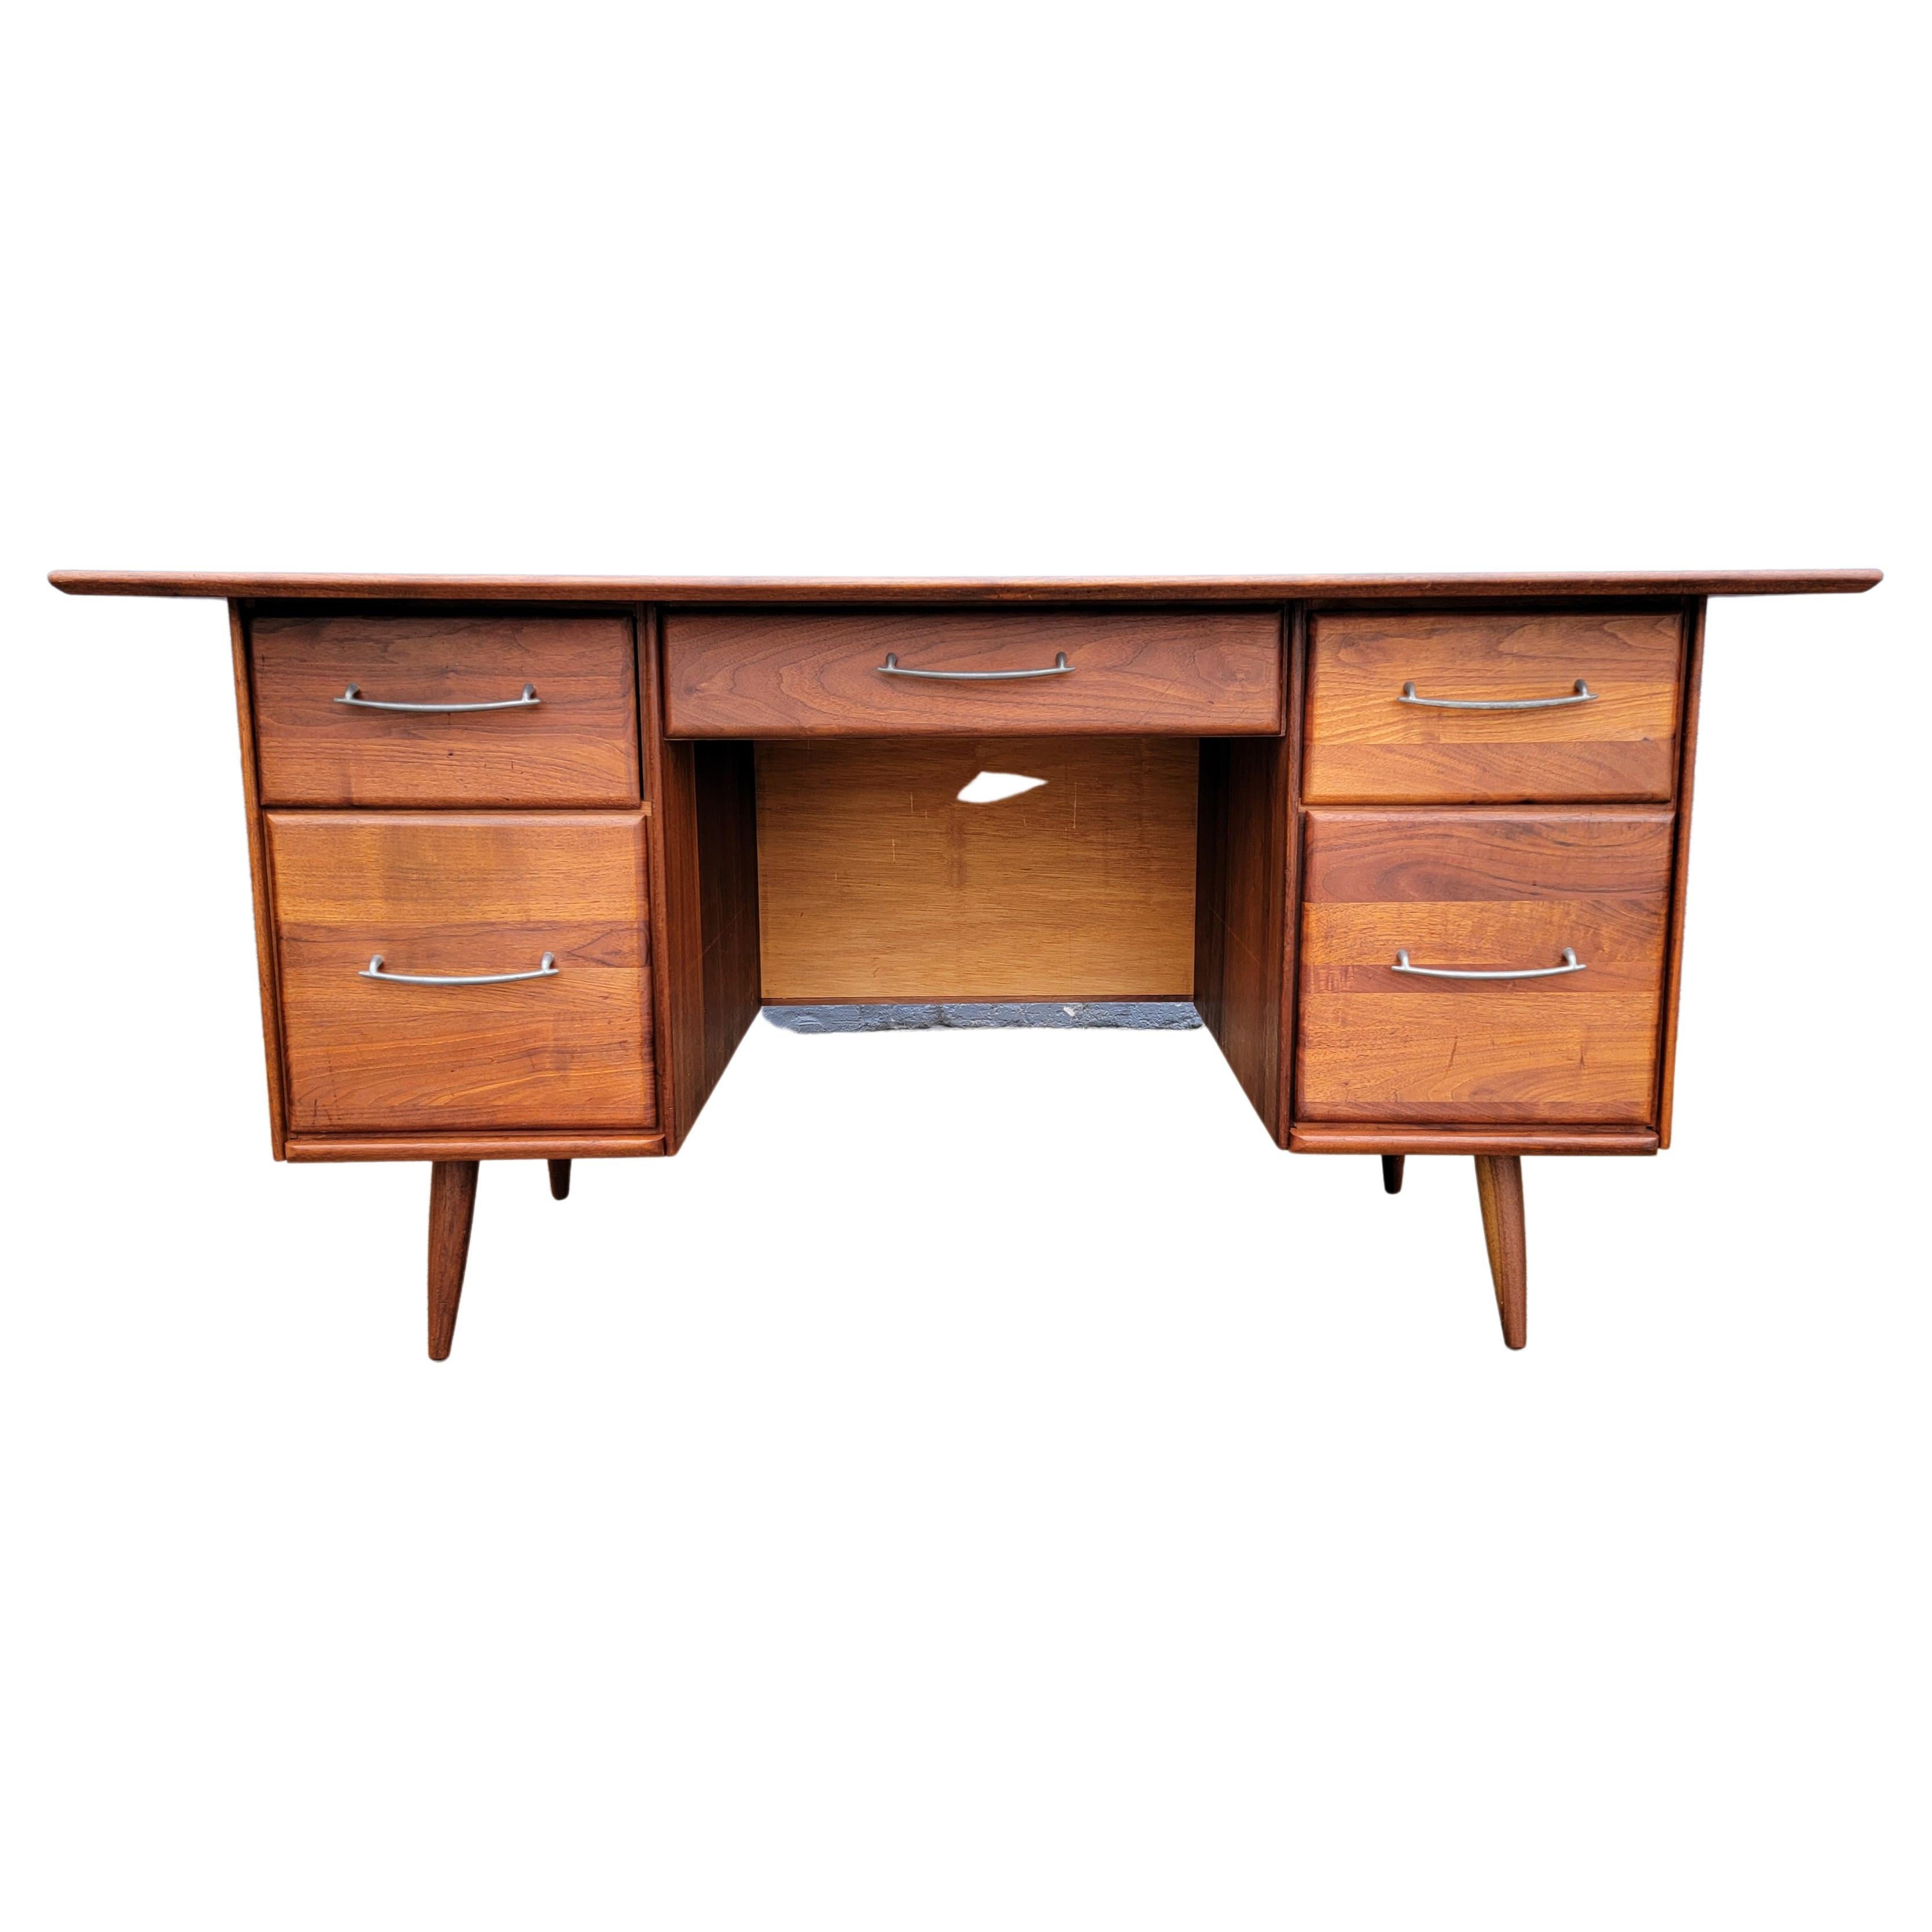 Mid-Century Walnut Desk by Prelude Furniture "Ace Hi" Line